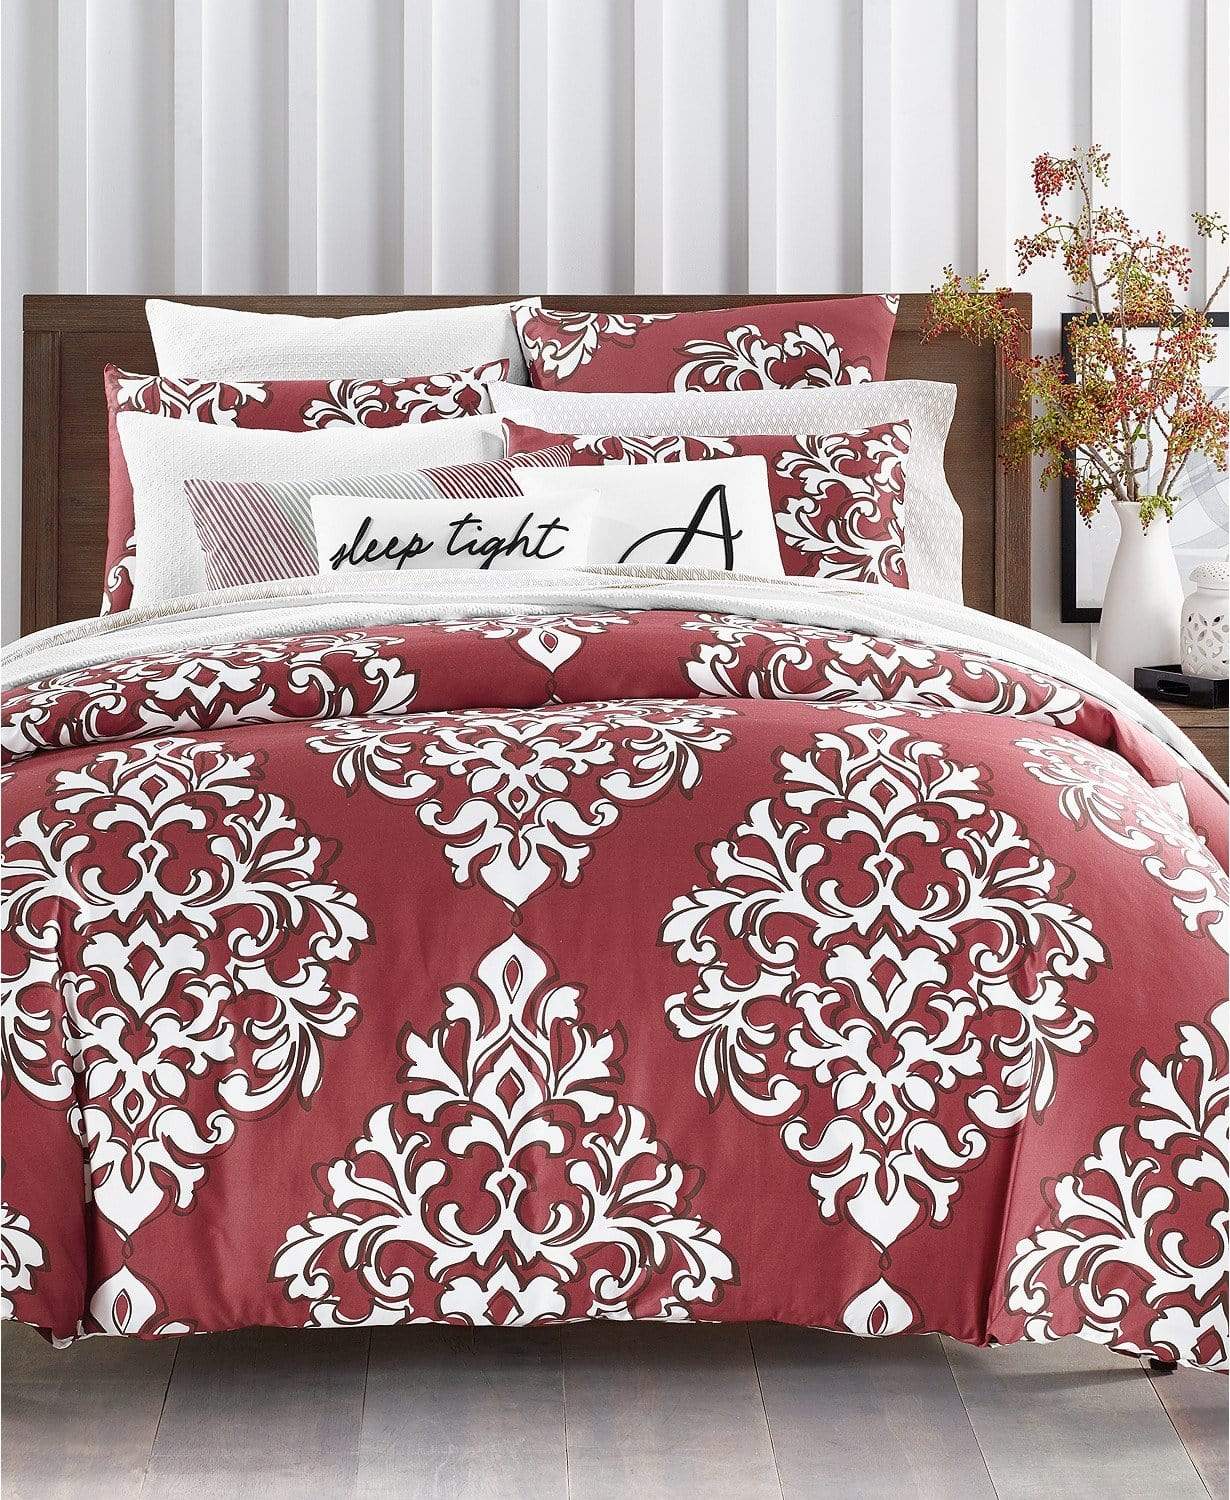 Charter Club Damask Collection Comforter/Quilt/Duvet Full / Queen / Burgundy / White Comforter Set - 3 Pieces